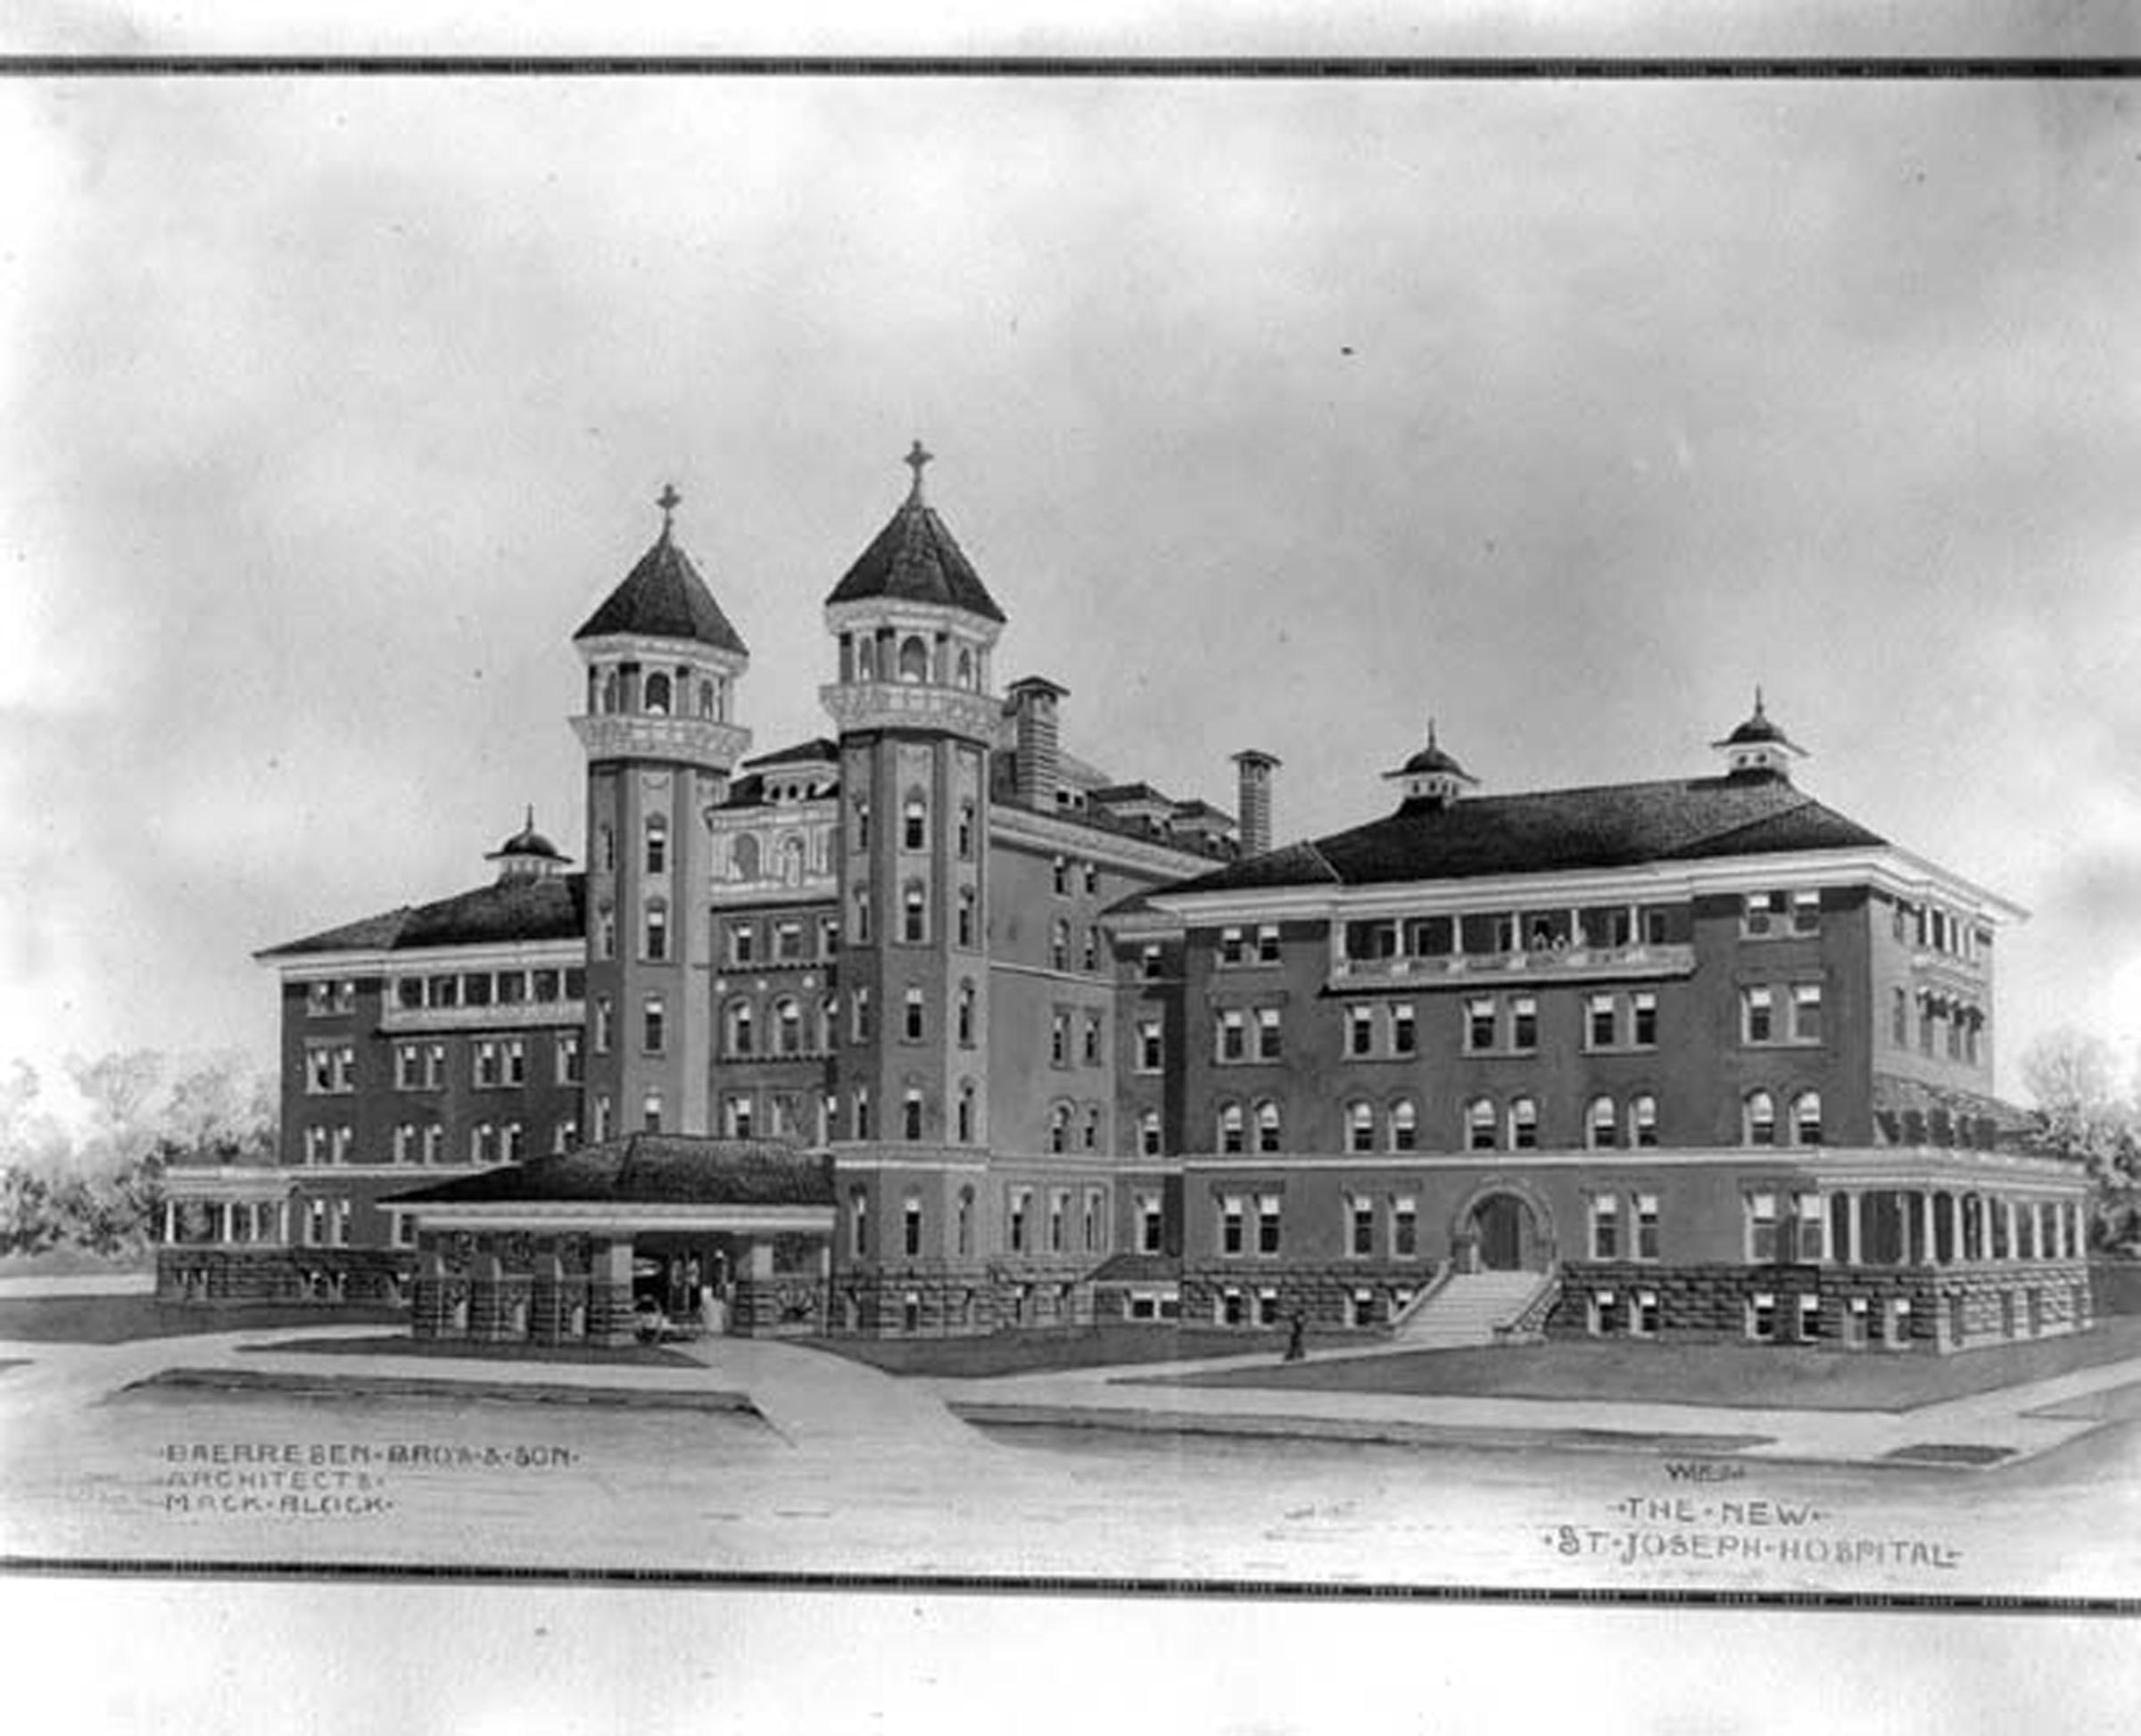 Original construct of St. Joseph Hospital